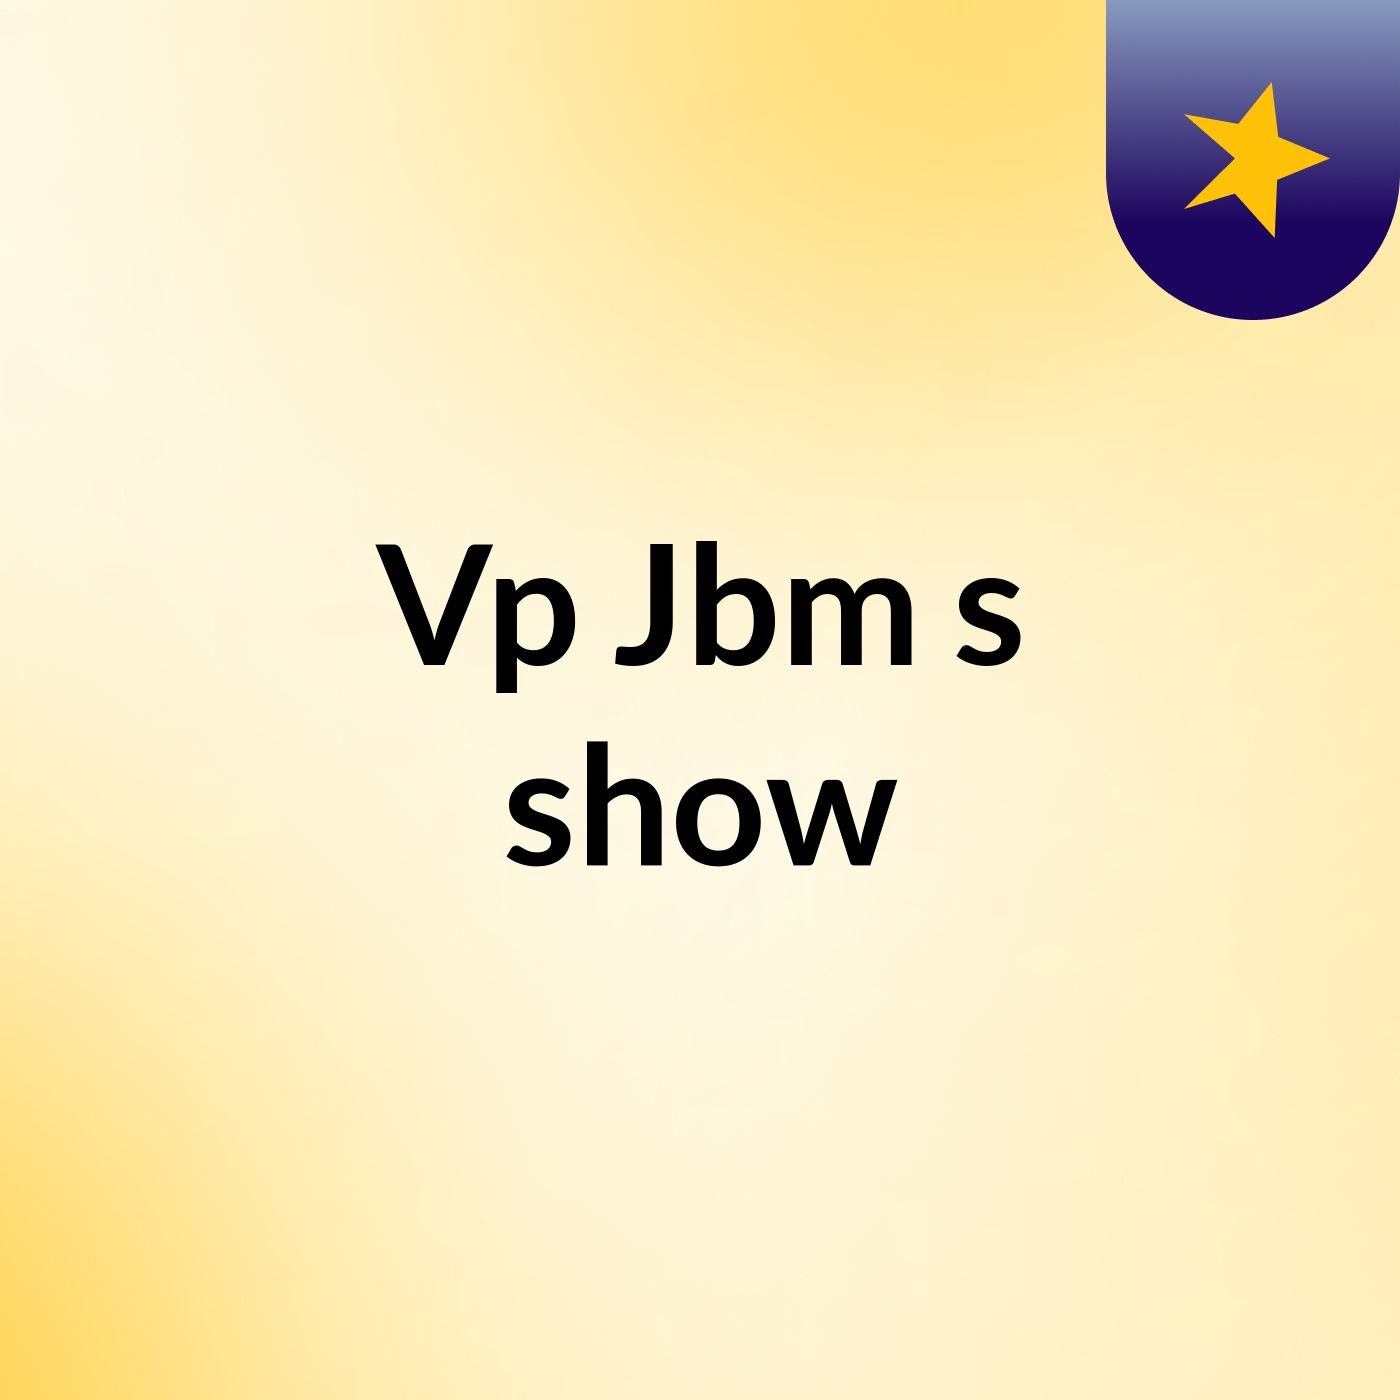 Vp Jbm's show